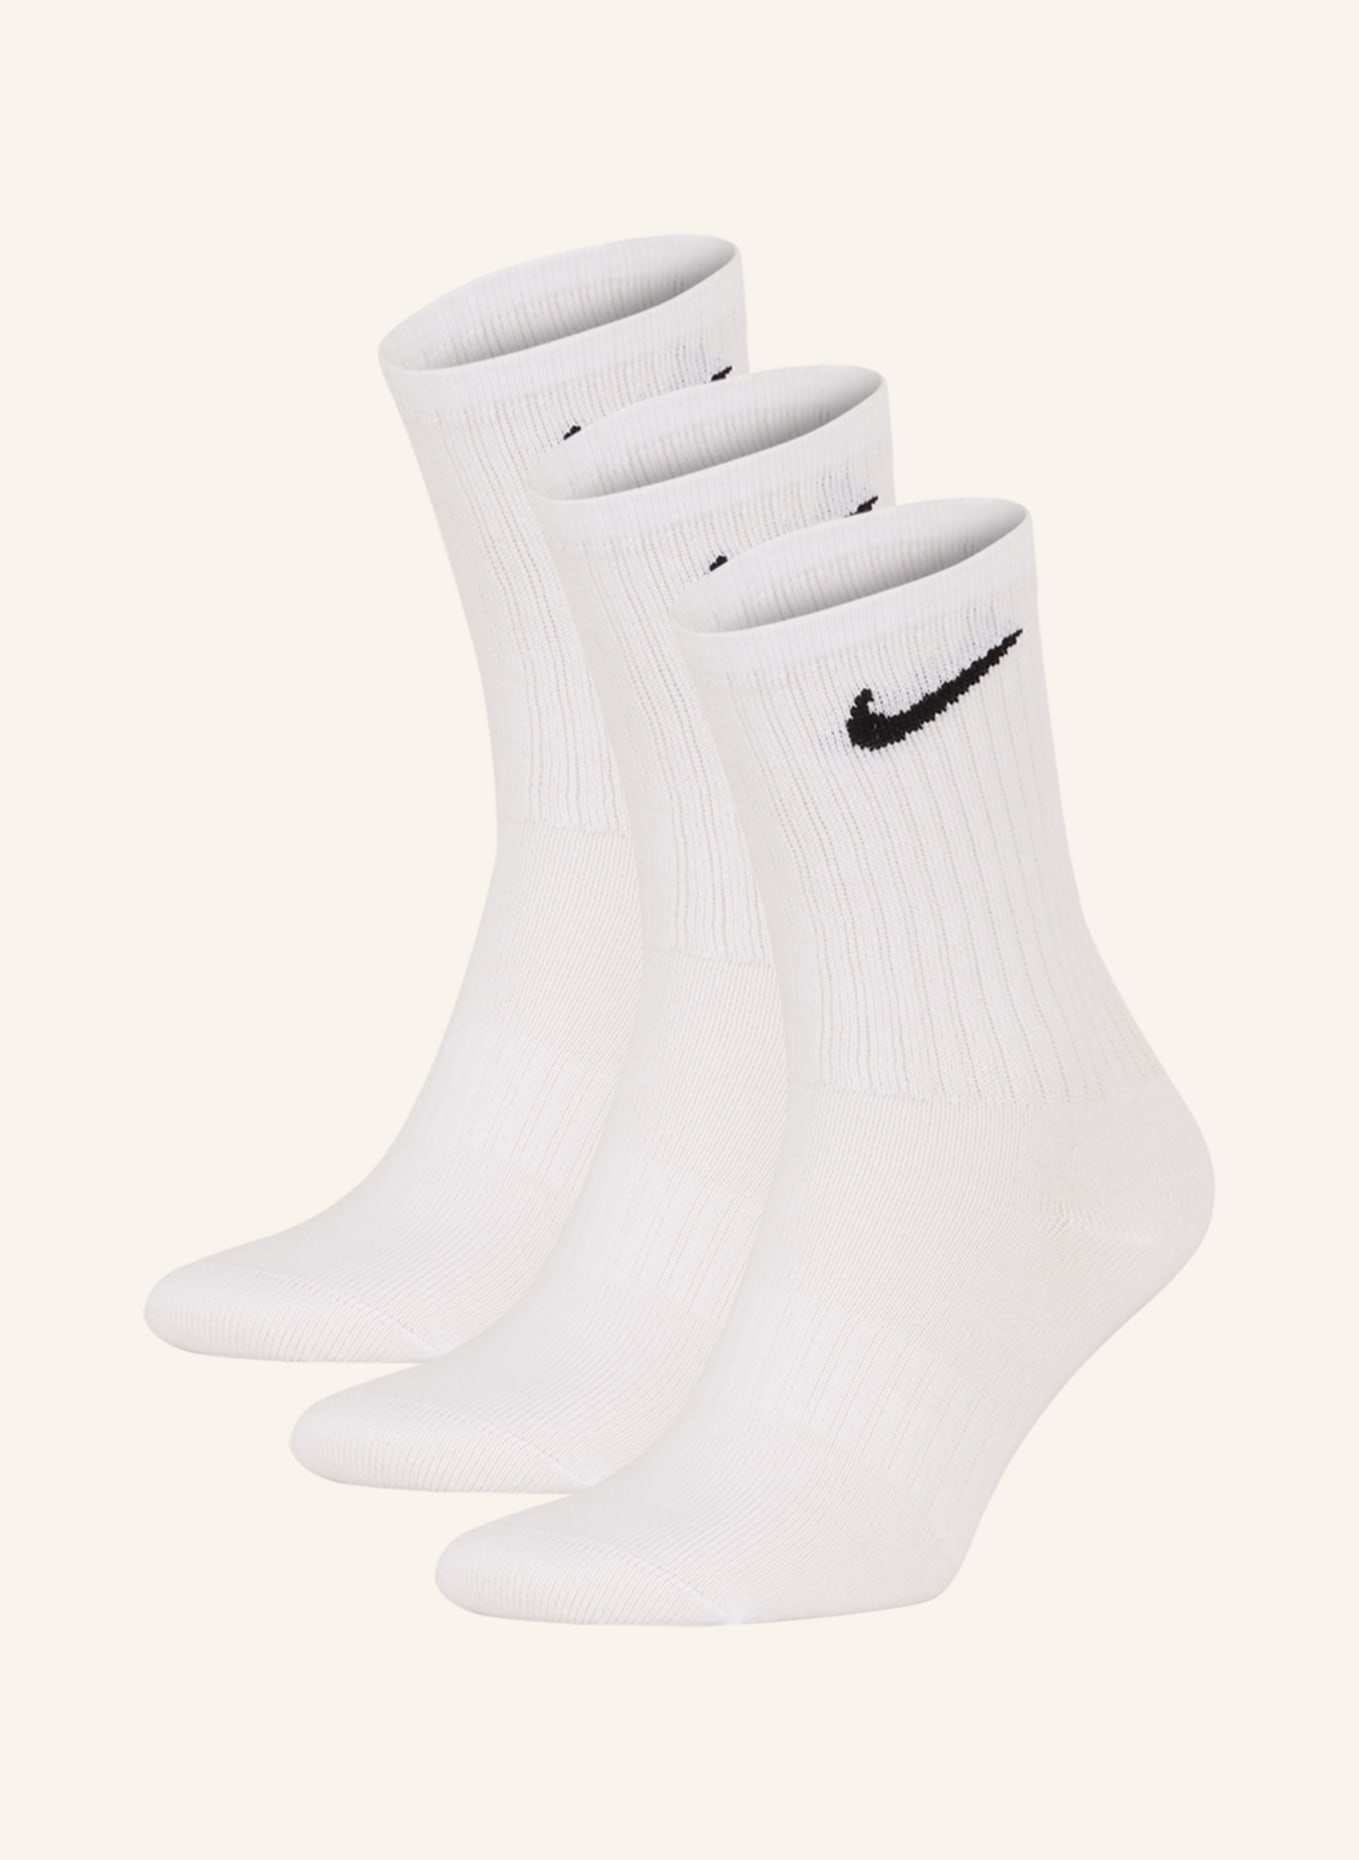 Nike Skarpety sportowe EVERDAY LIGHWEIGHT, 3 pary, Kolor: 100 WHITE/BLACK (Obrazek 1)